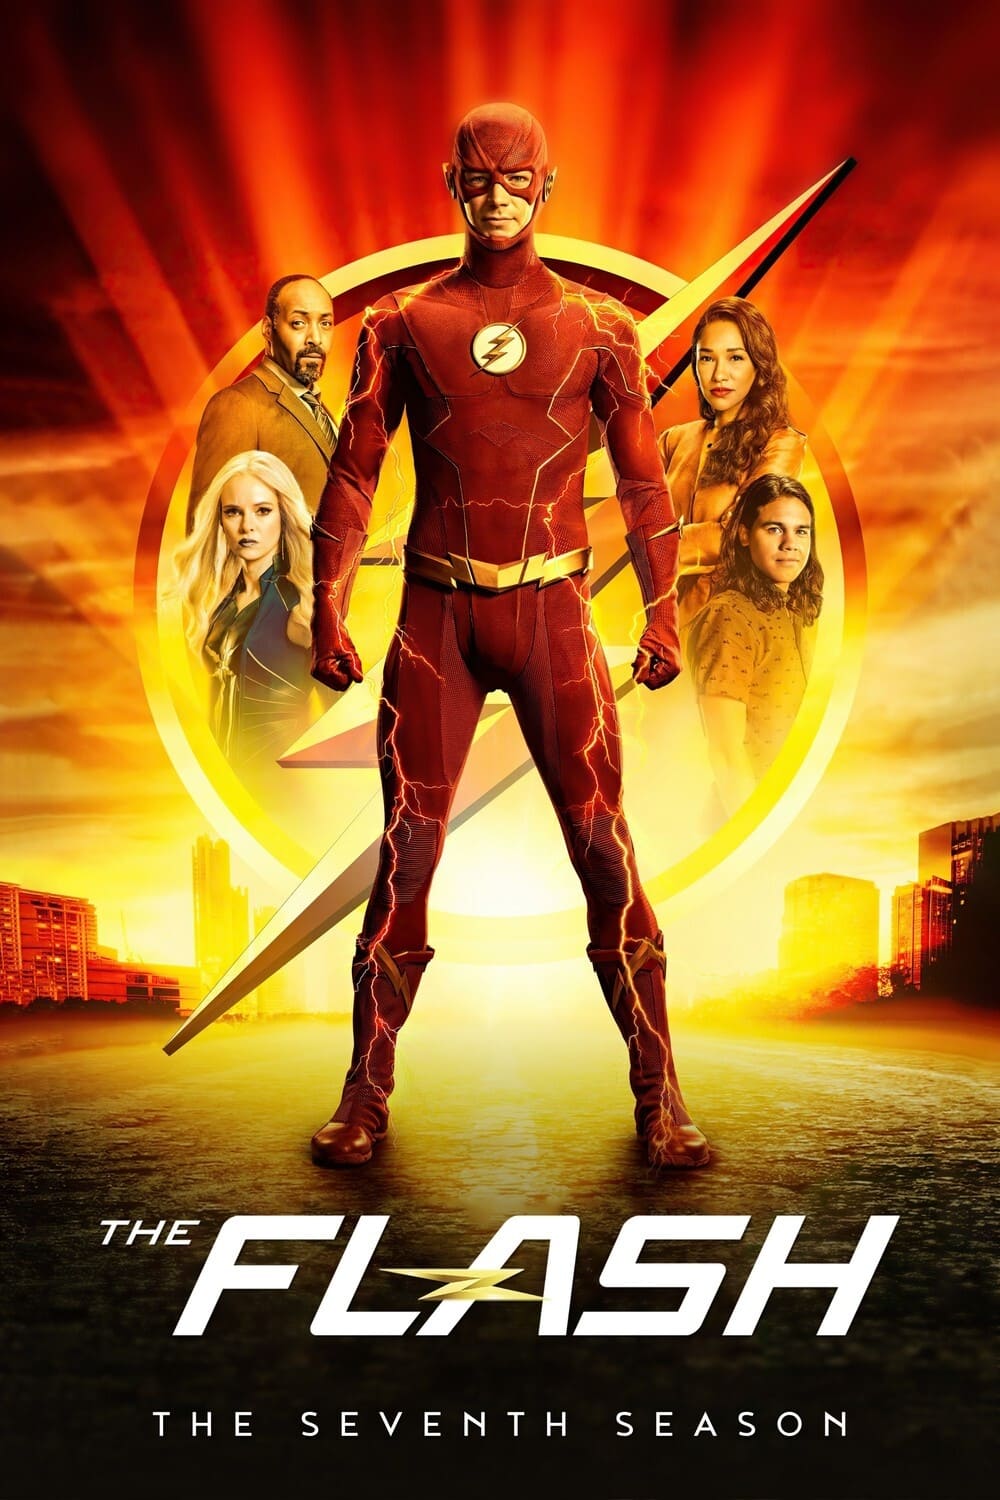 The Flash Season 7 (2021) Episode 18